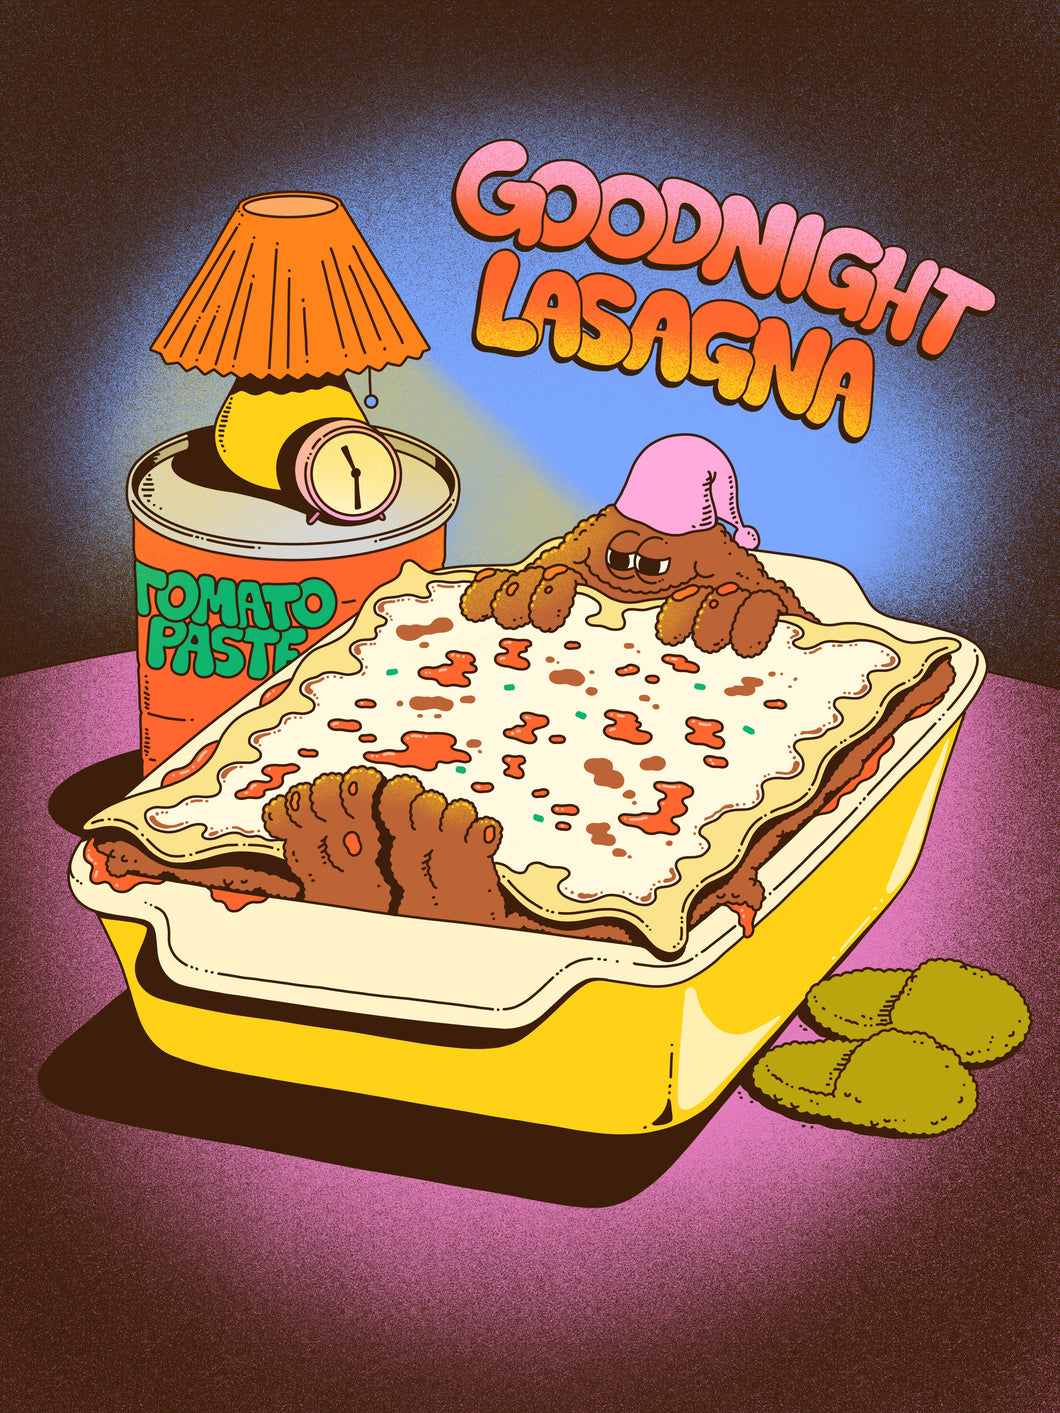 'Goodnight Lasagna' Poster